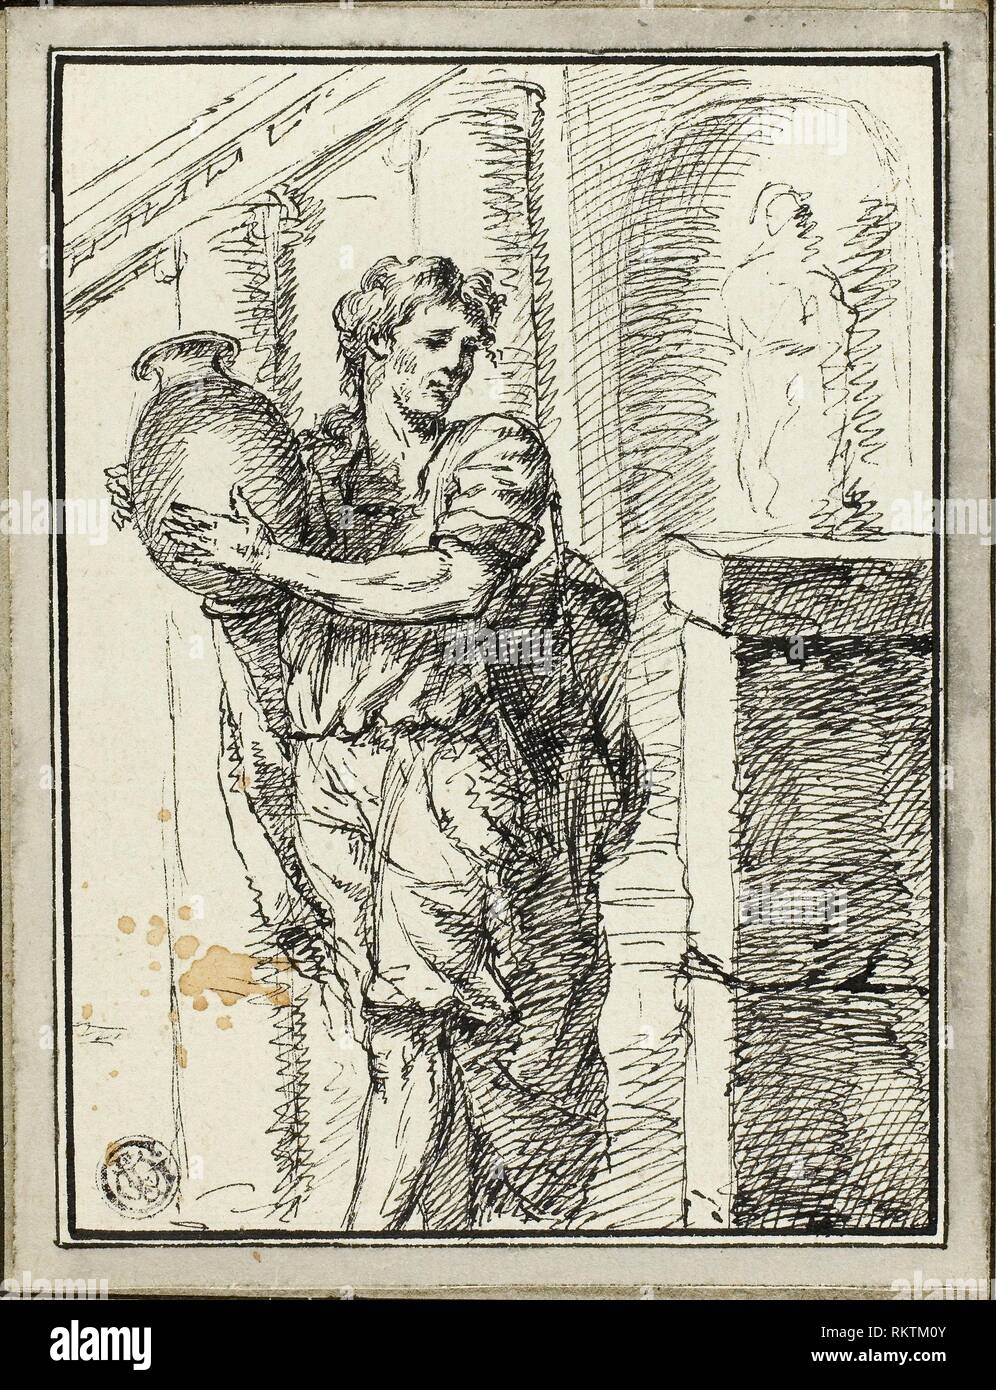 Man Holding Jar - 1785 - David Pierre Giottino Humbert de Superville Dutch, 1770-1849 - Artist: David Pierre Giottino Humbert de Superville, Origin: Stock Photo